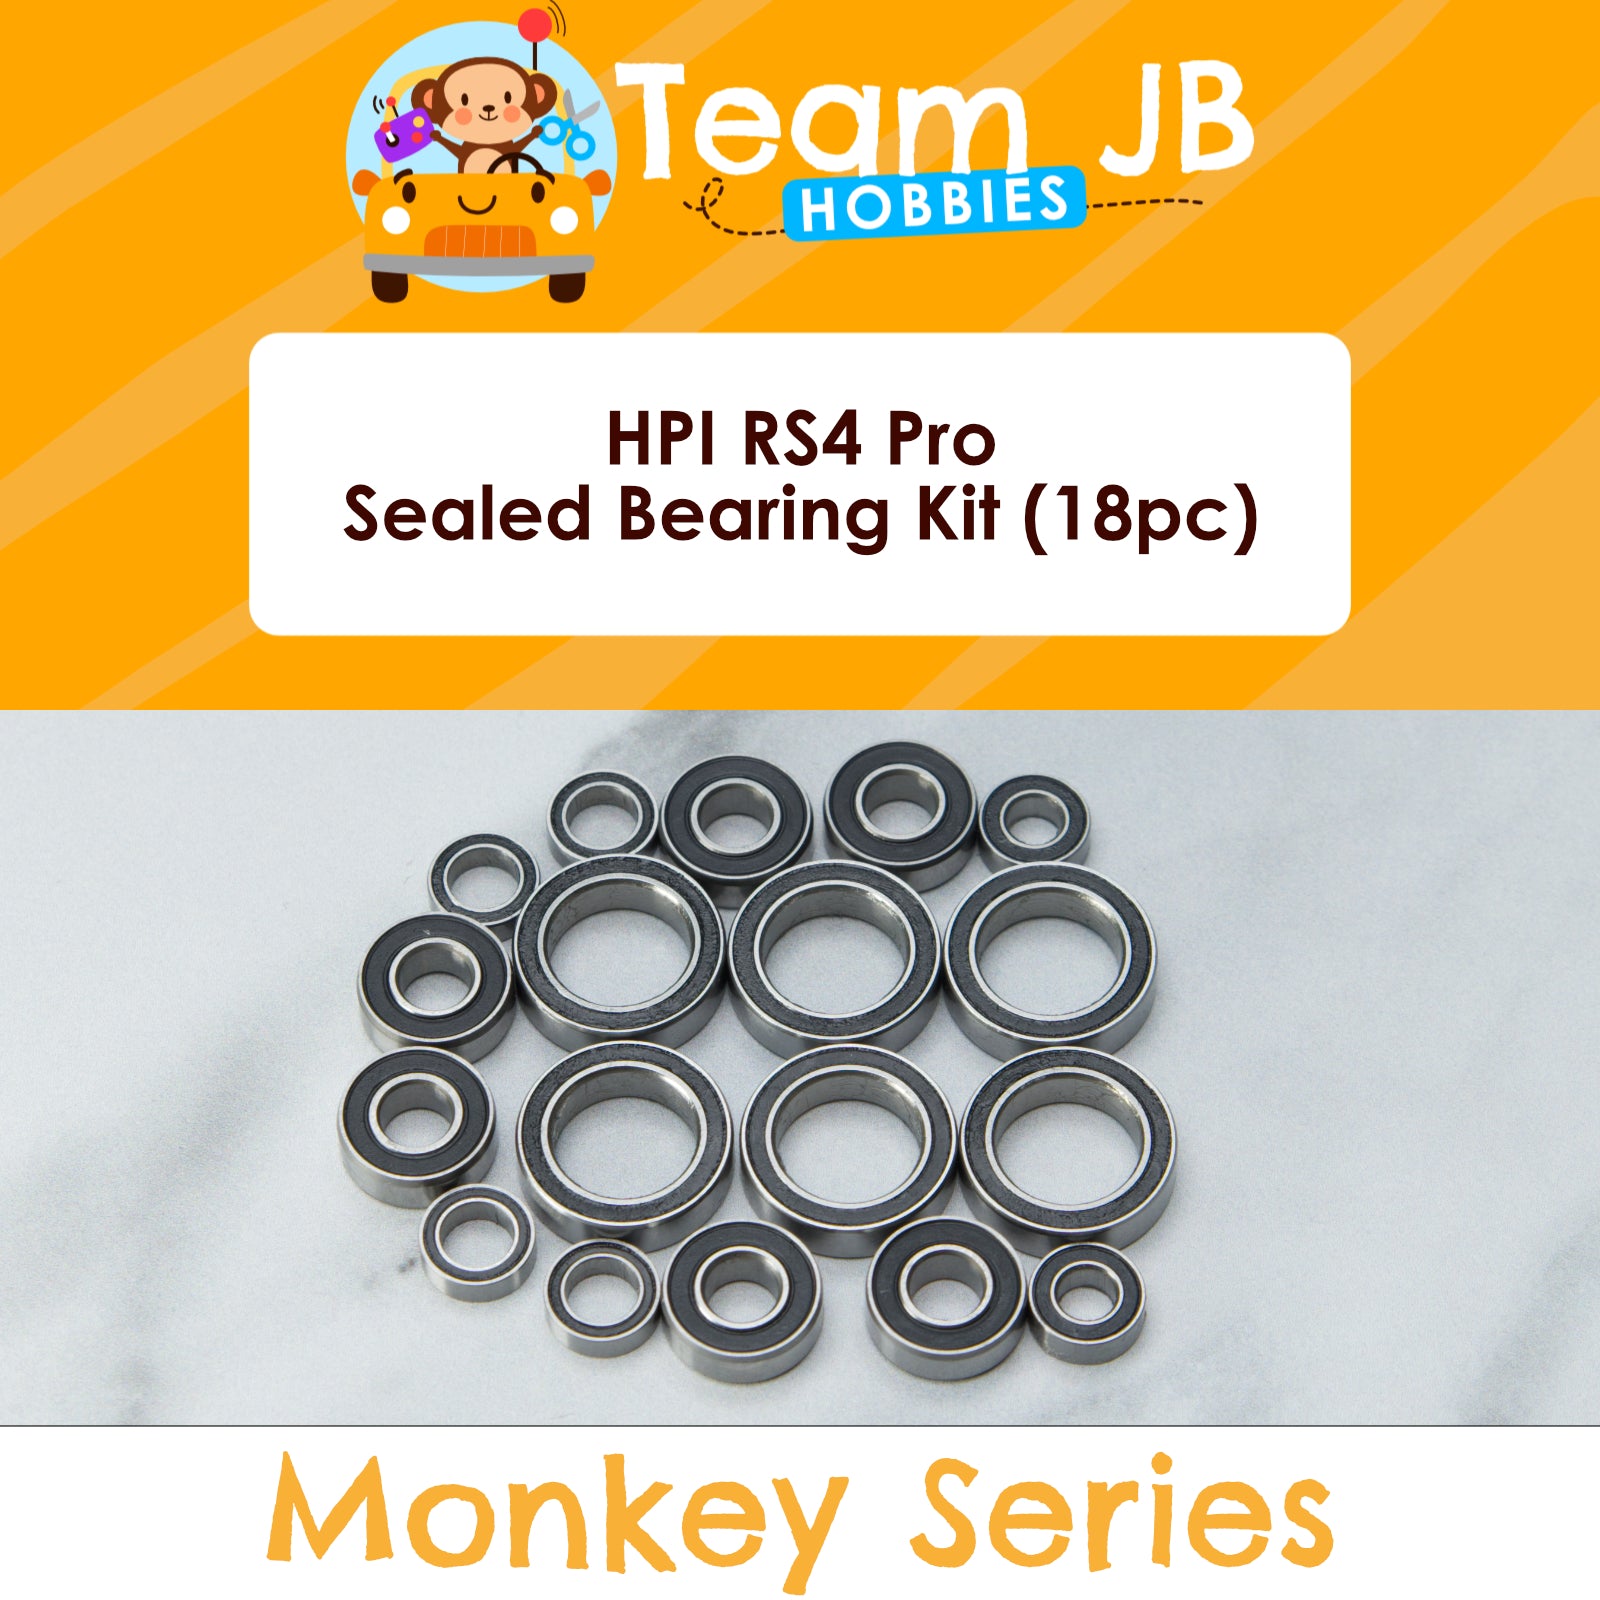 HPI RS4 Pro - Sealed Bearing Kit